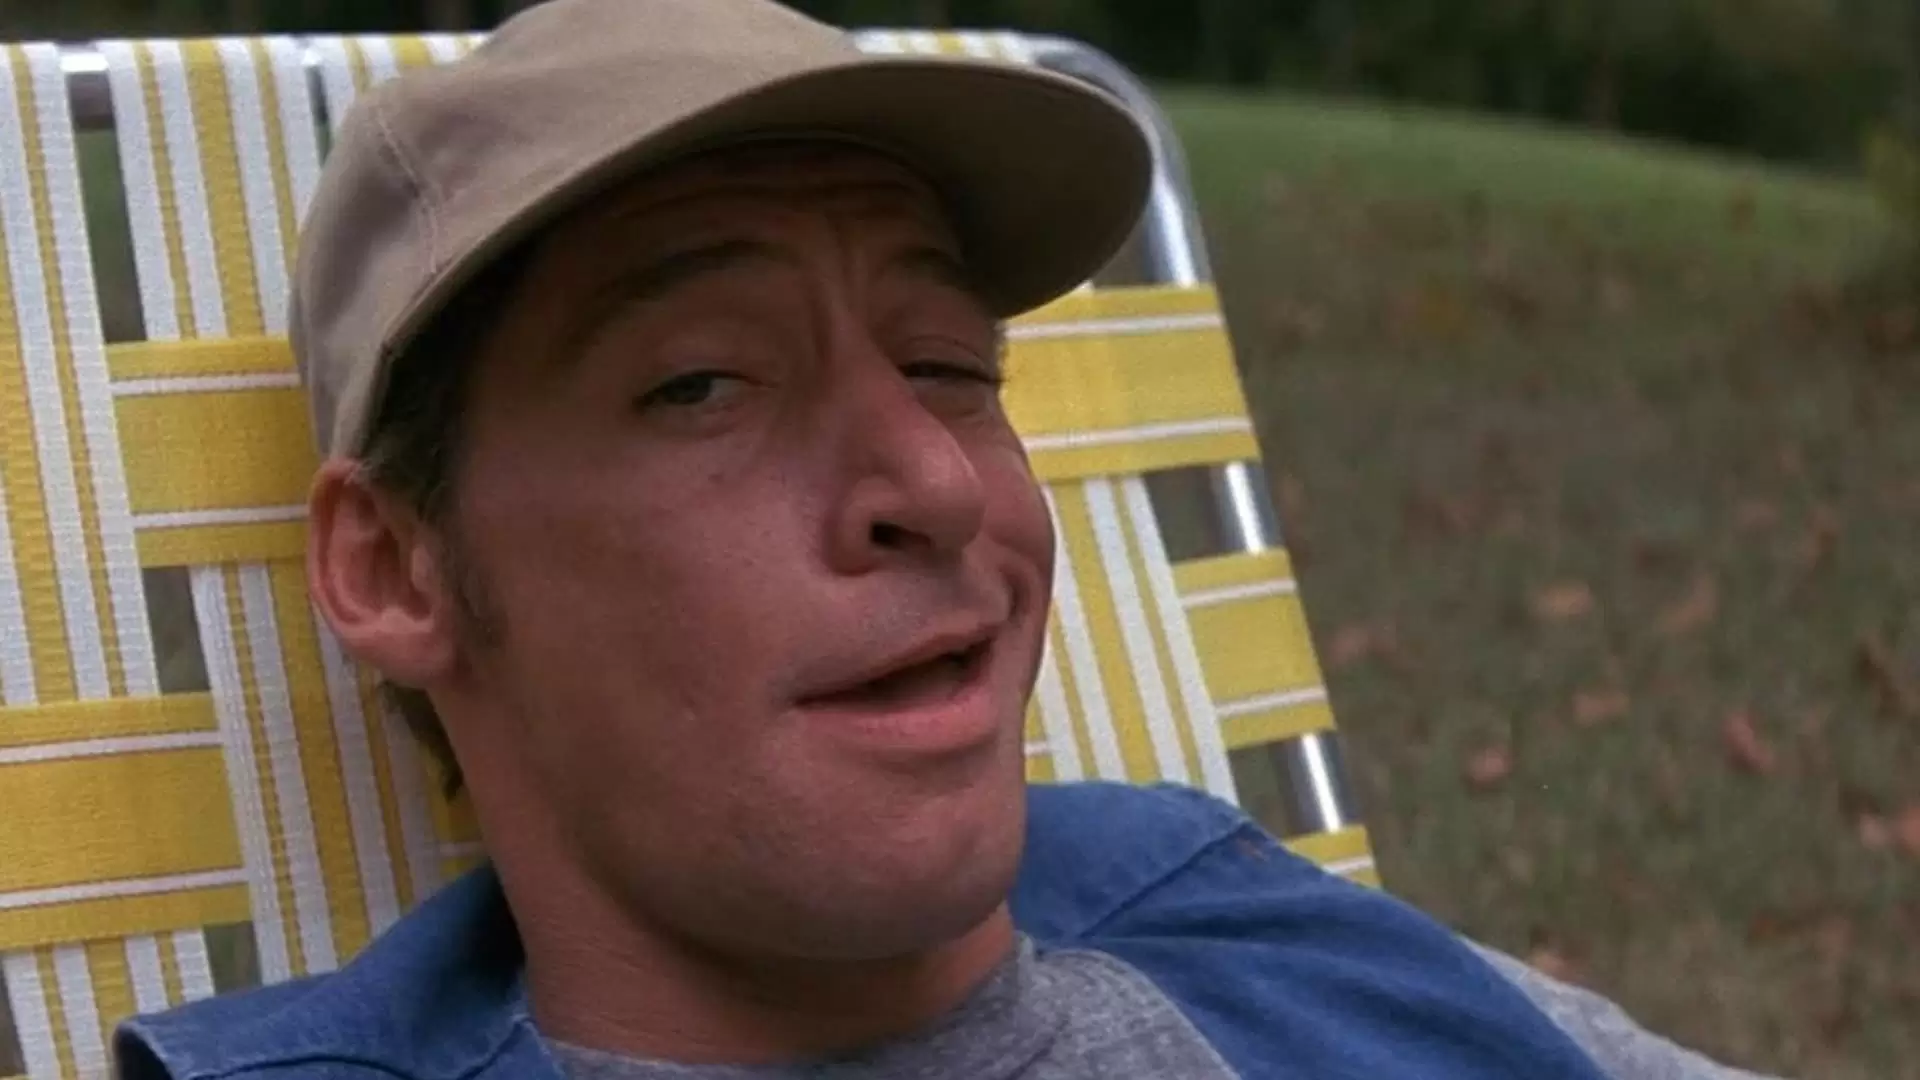 دانلود فیلم Ernest Goes to Camp 1987